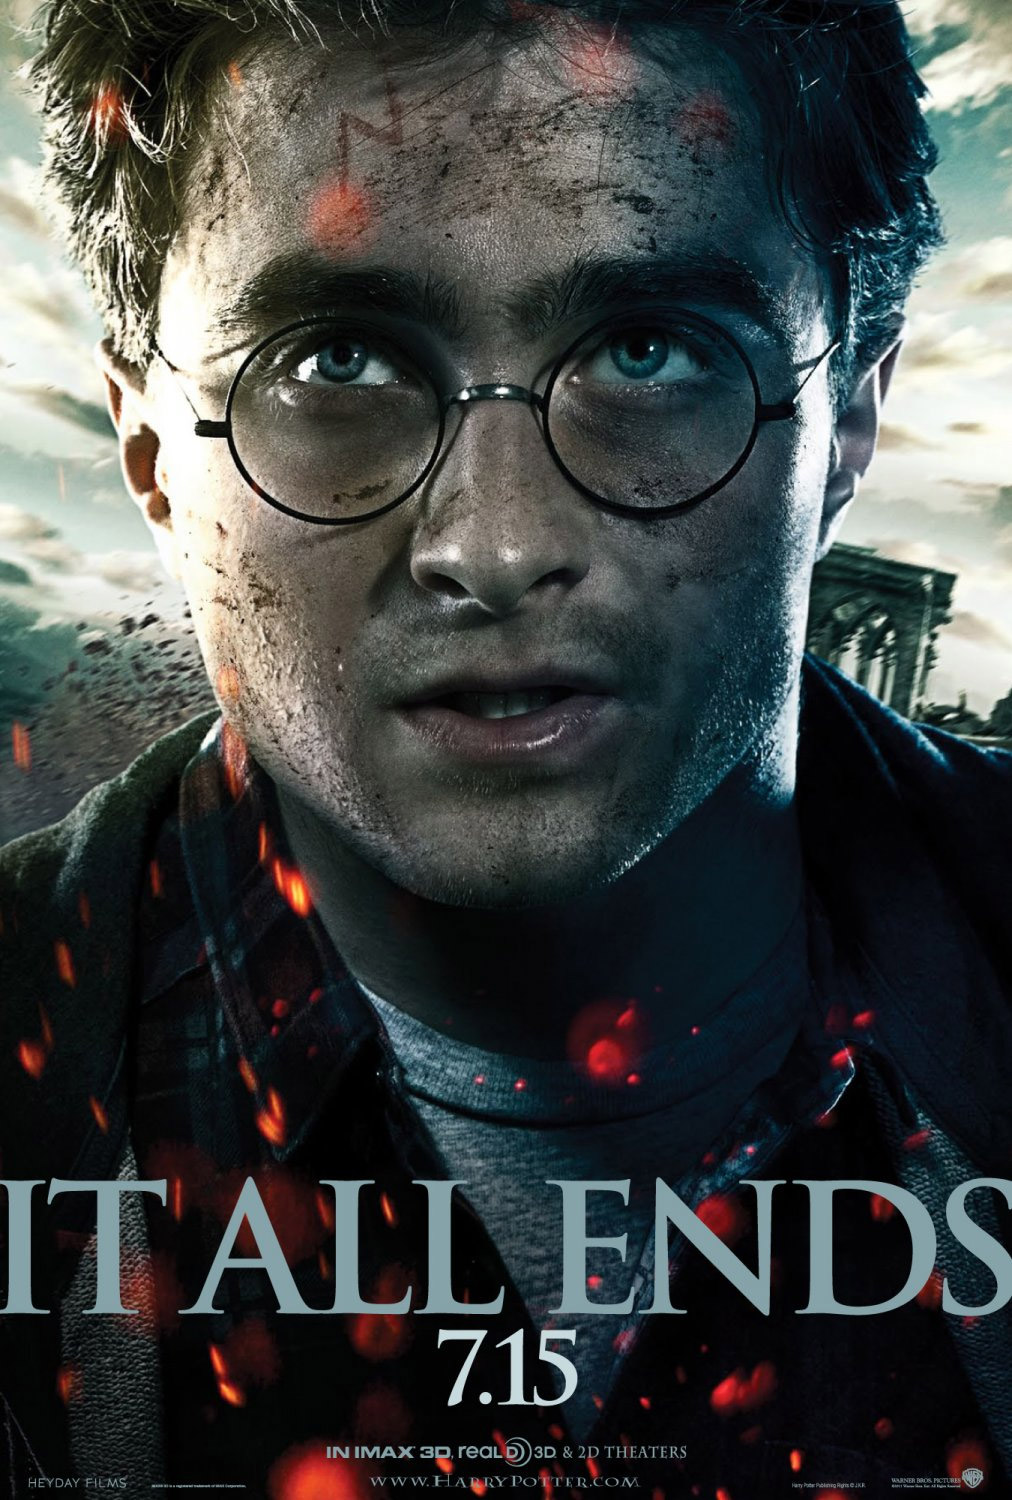 I fixed the new Harry Potter poster | Movie News - theshiznit.co.uk